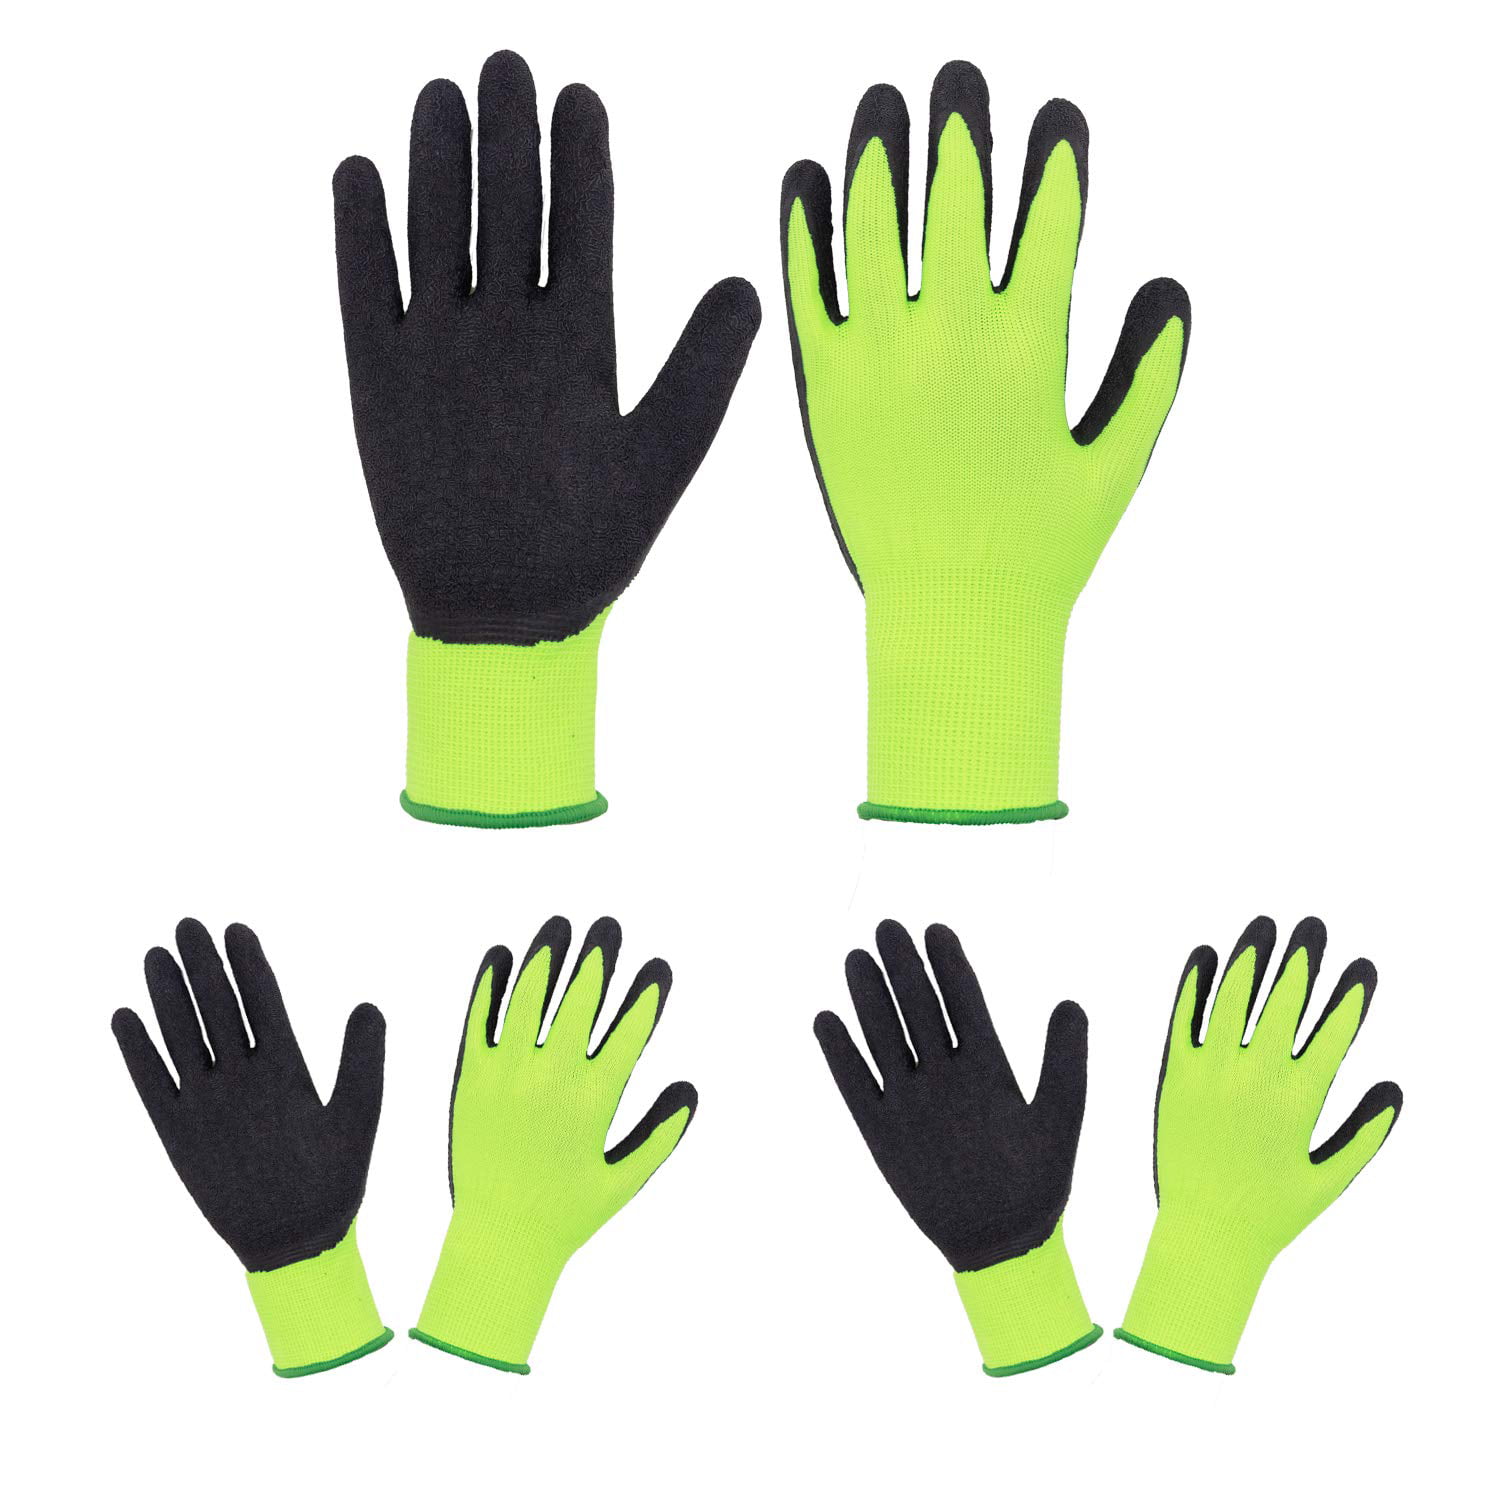 Rubber Coated Palm Garden Gloves for Boys Girls 3 Pairs Kids Gardening Gloves for age 2-13 Children Garden Gripper Gloves 